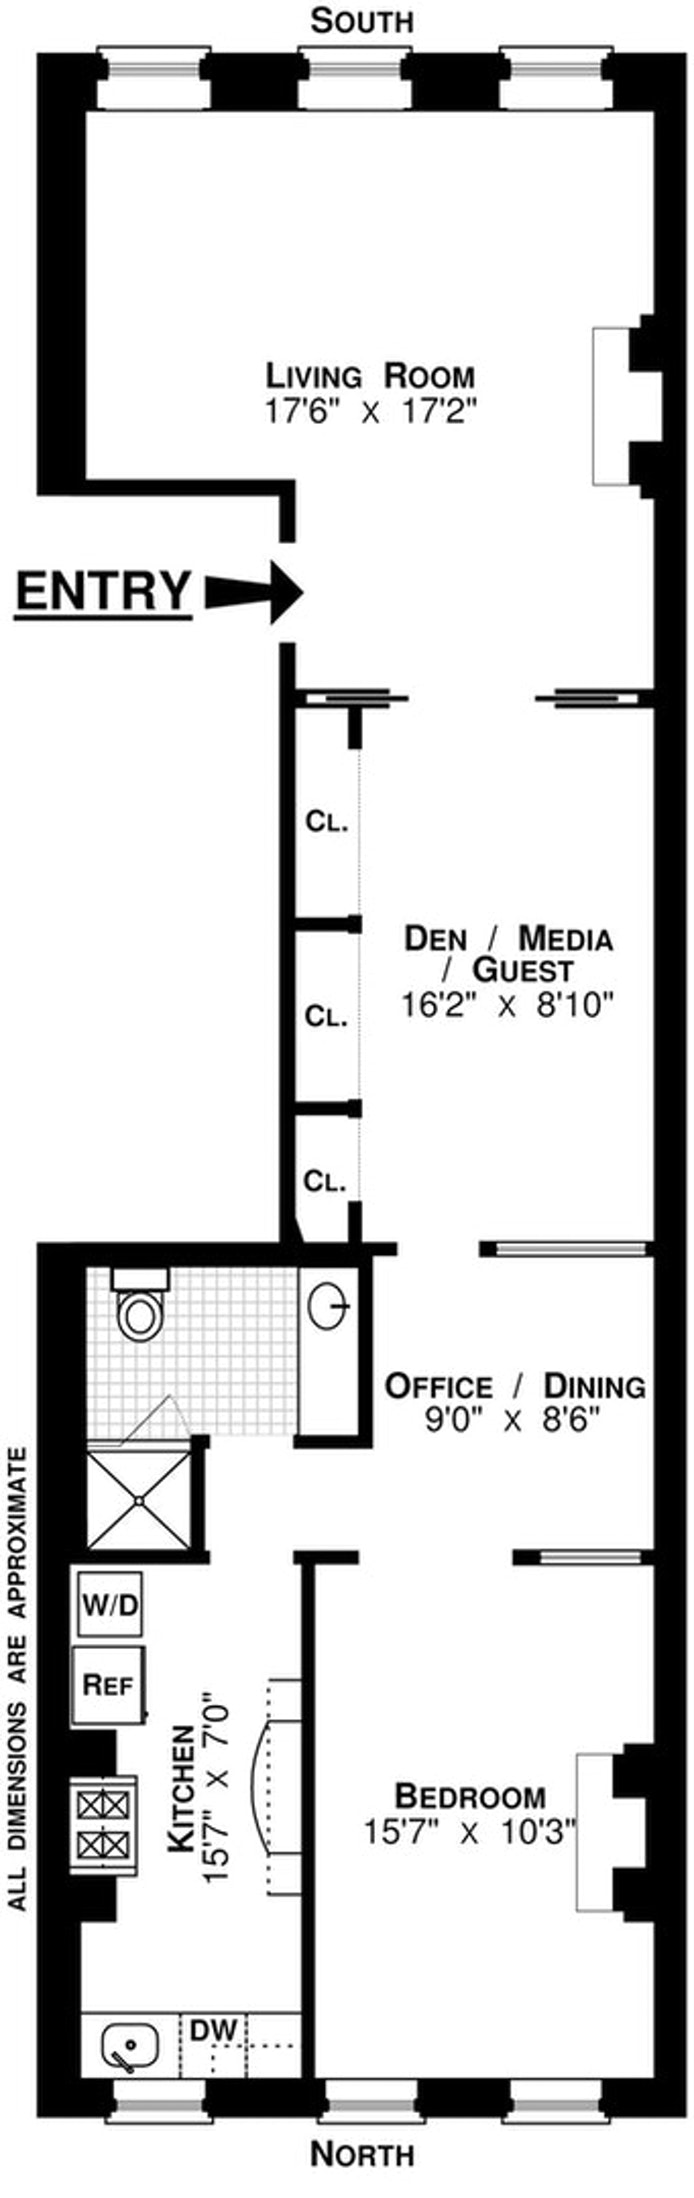 Floorplan for 355 West, 22nd Street, 2